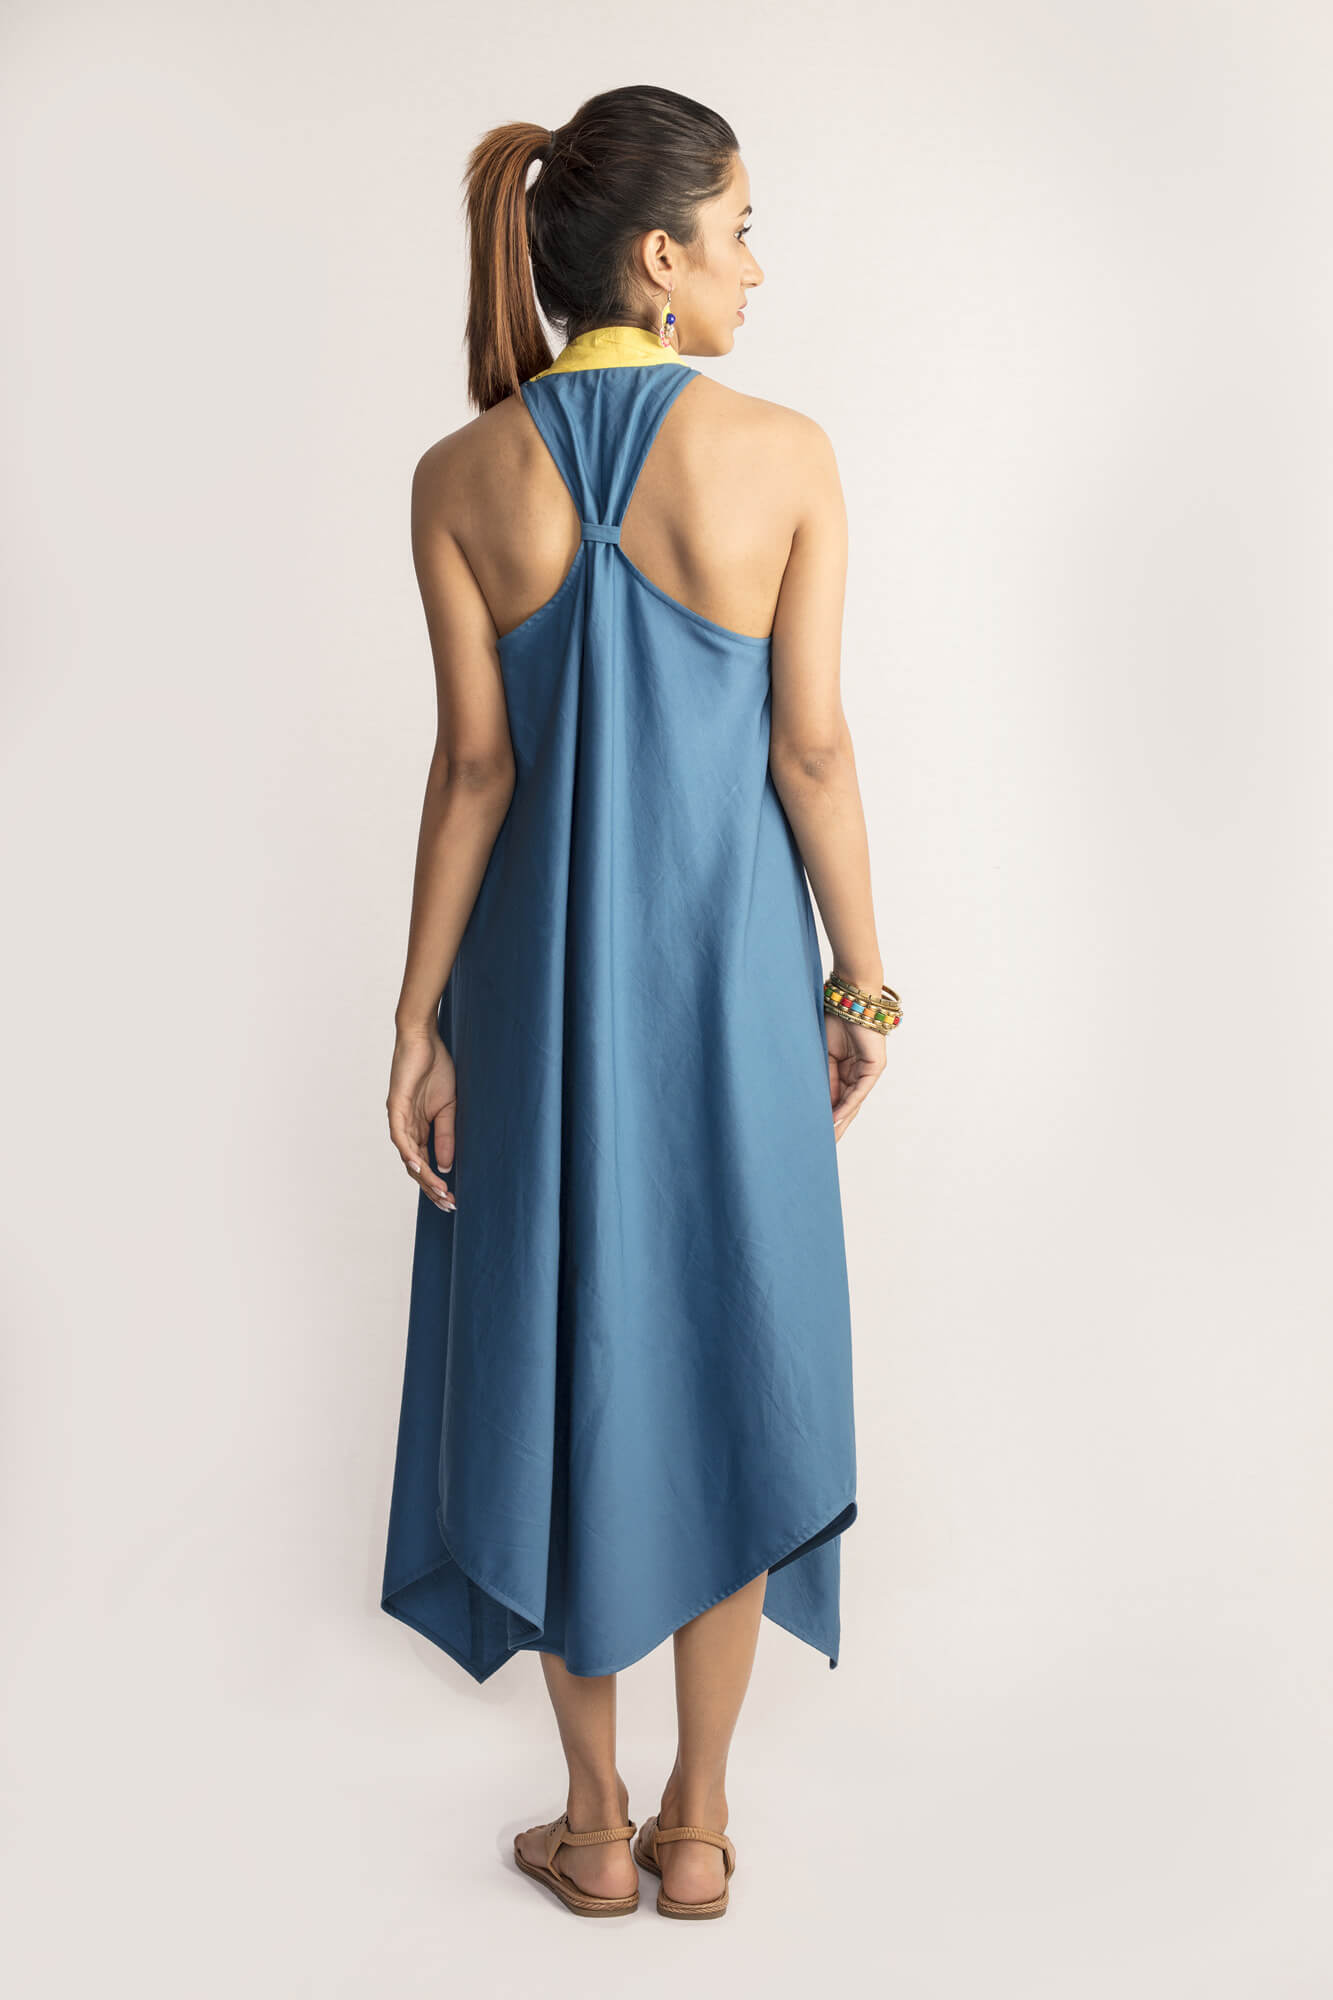 Blue Asymmetrical Dress By TAMASQ